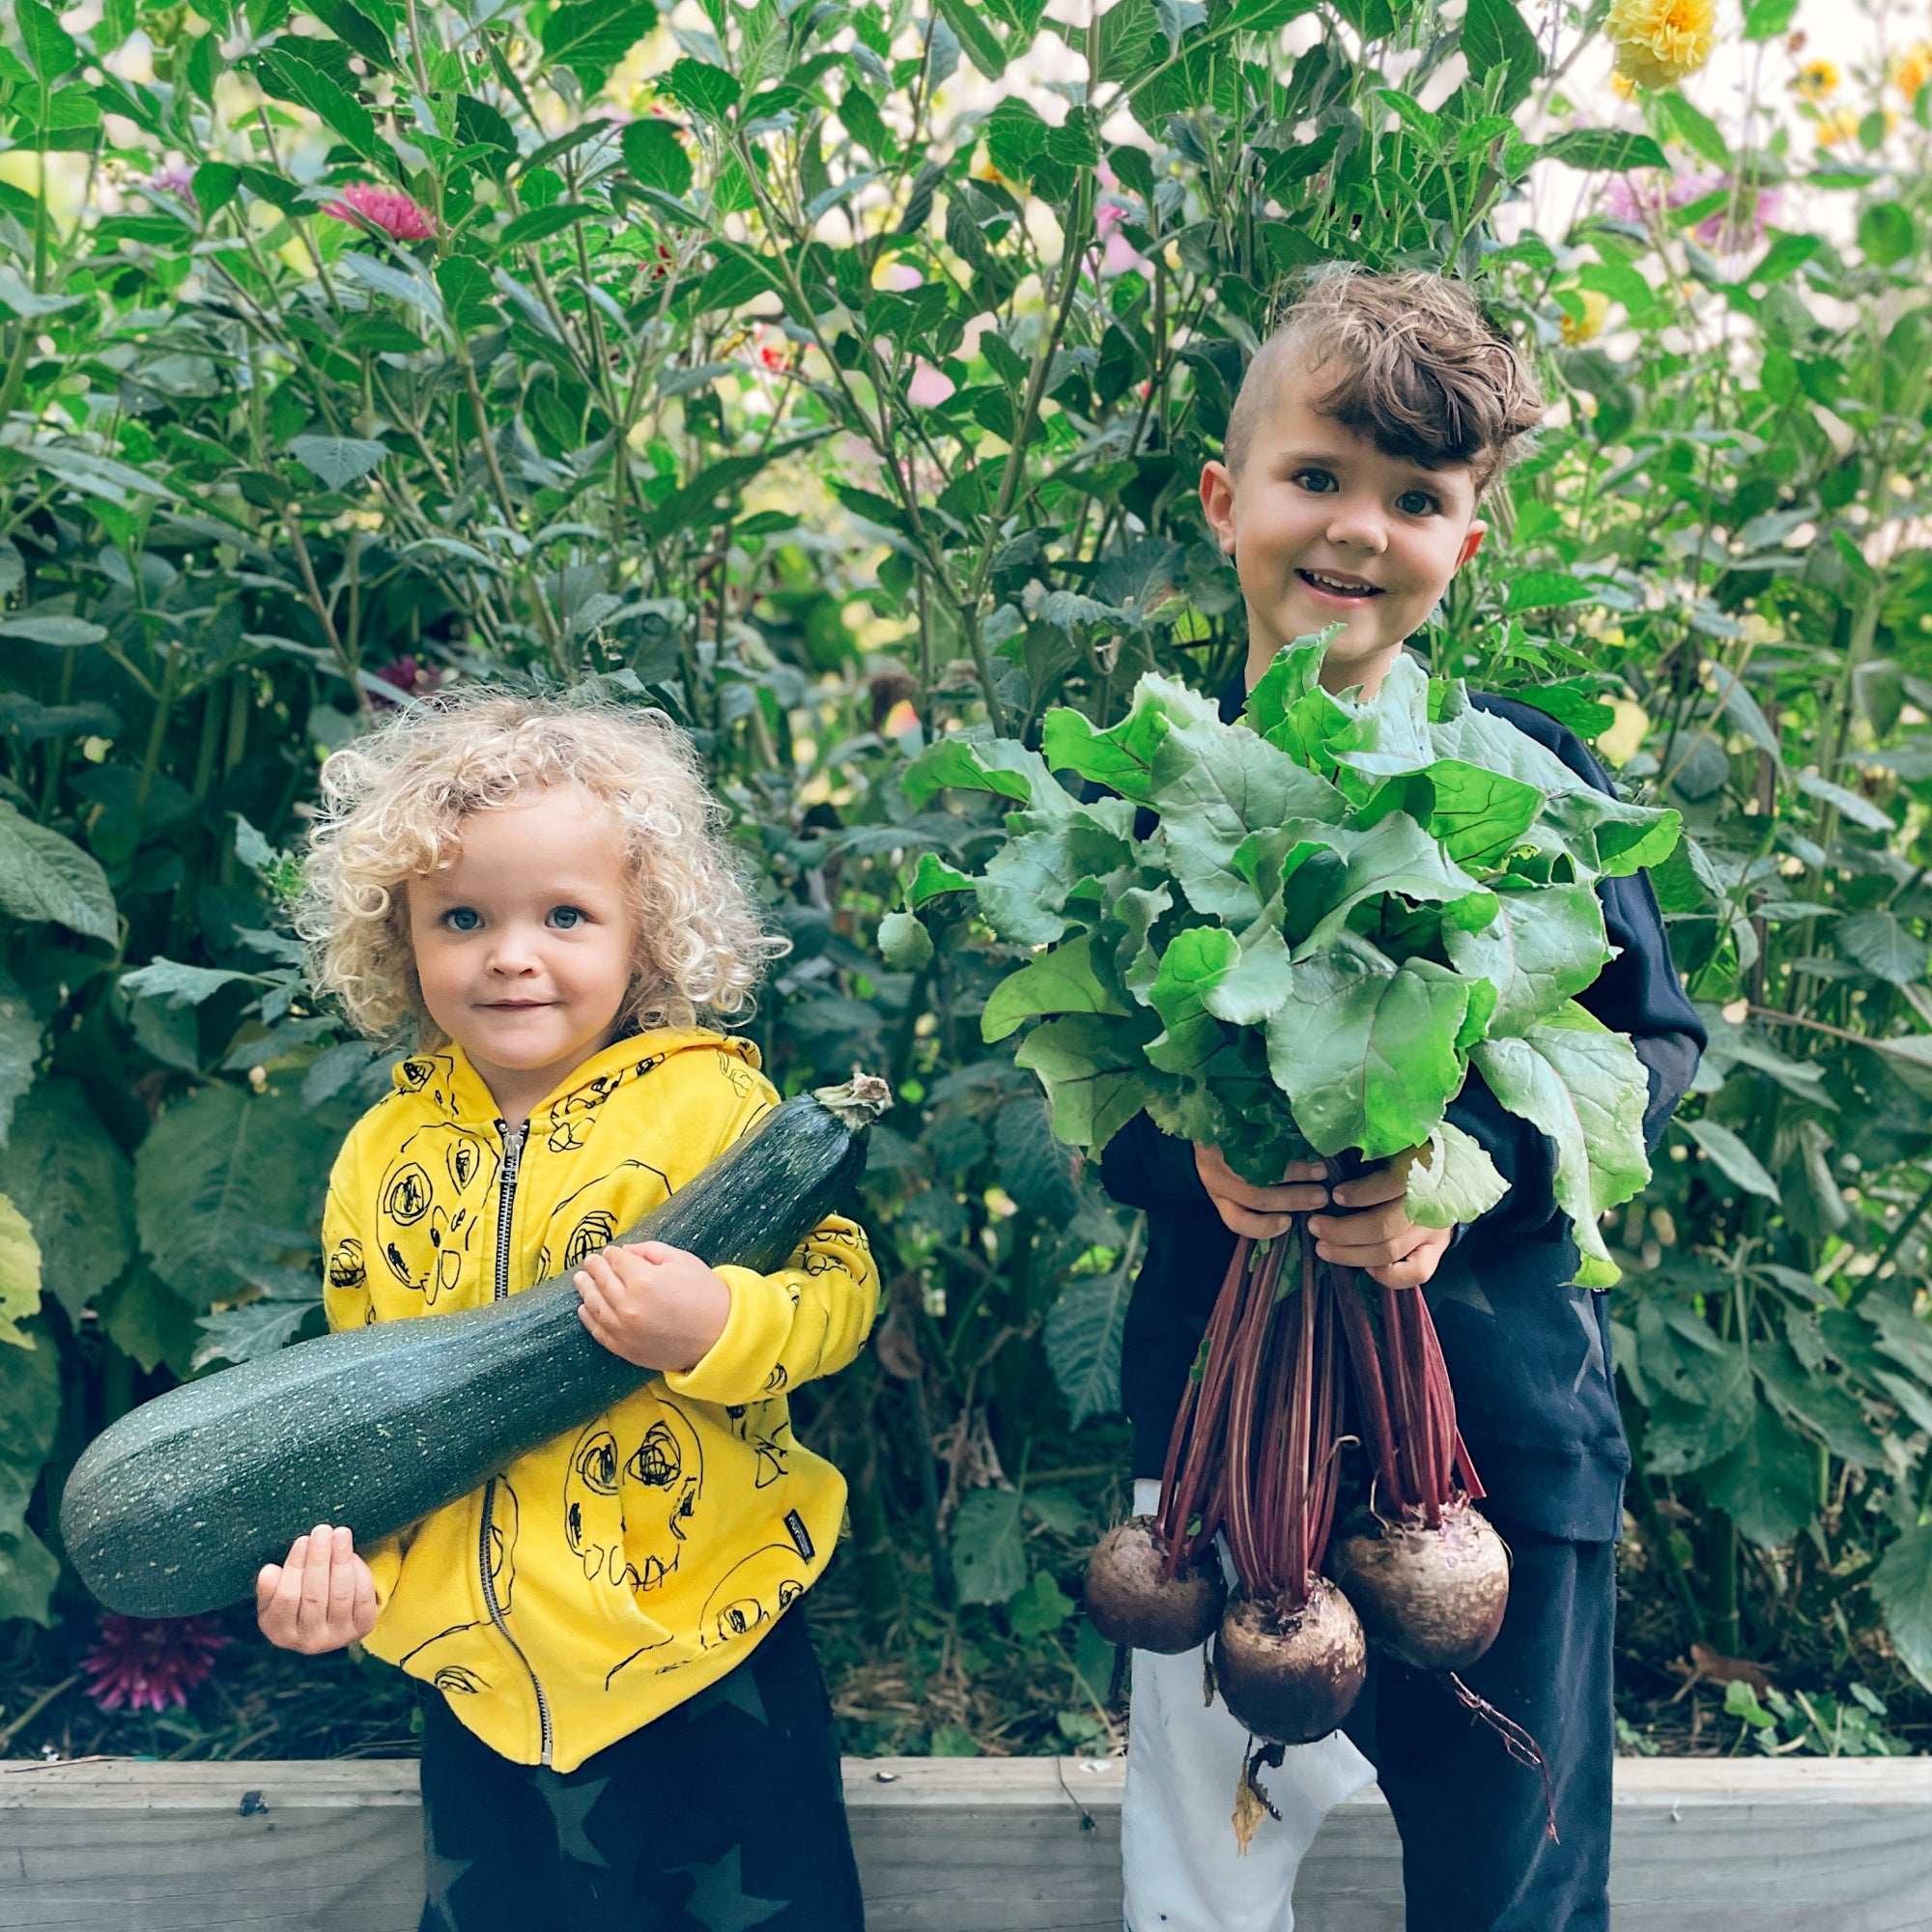 Gardening with kids